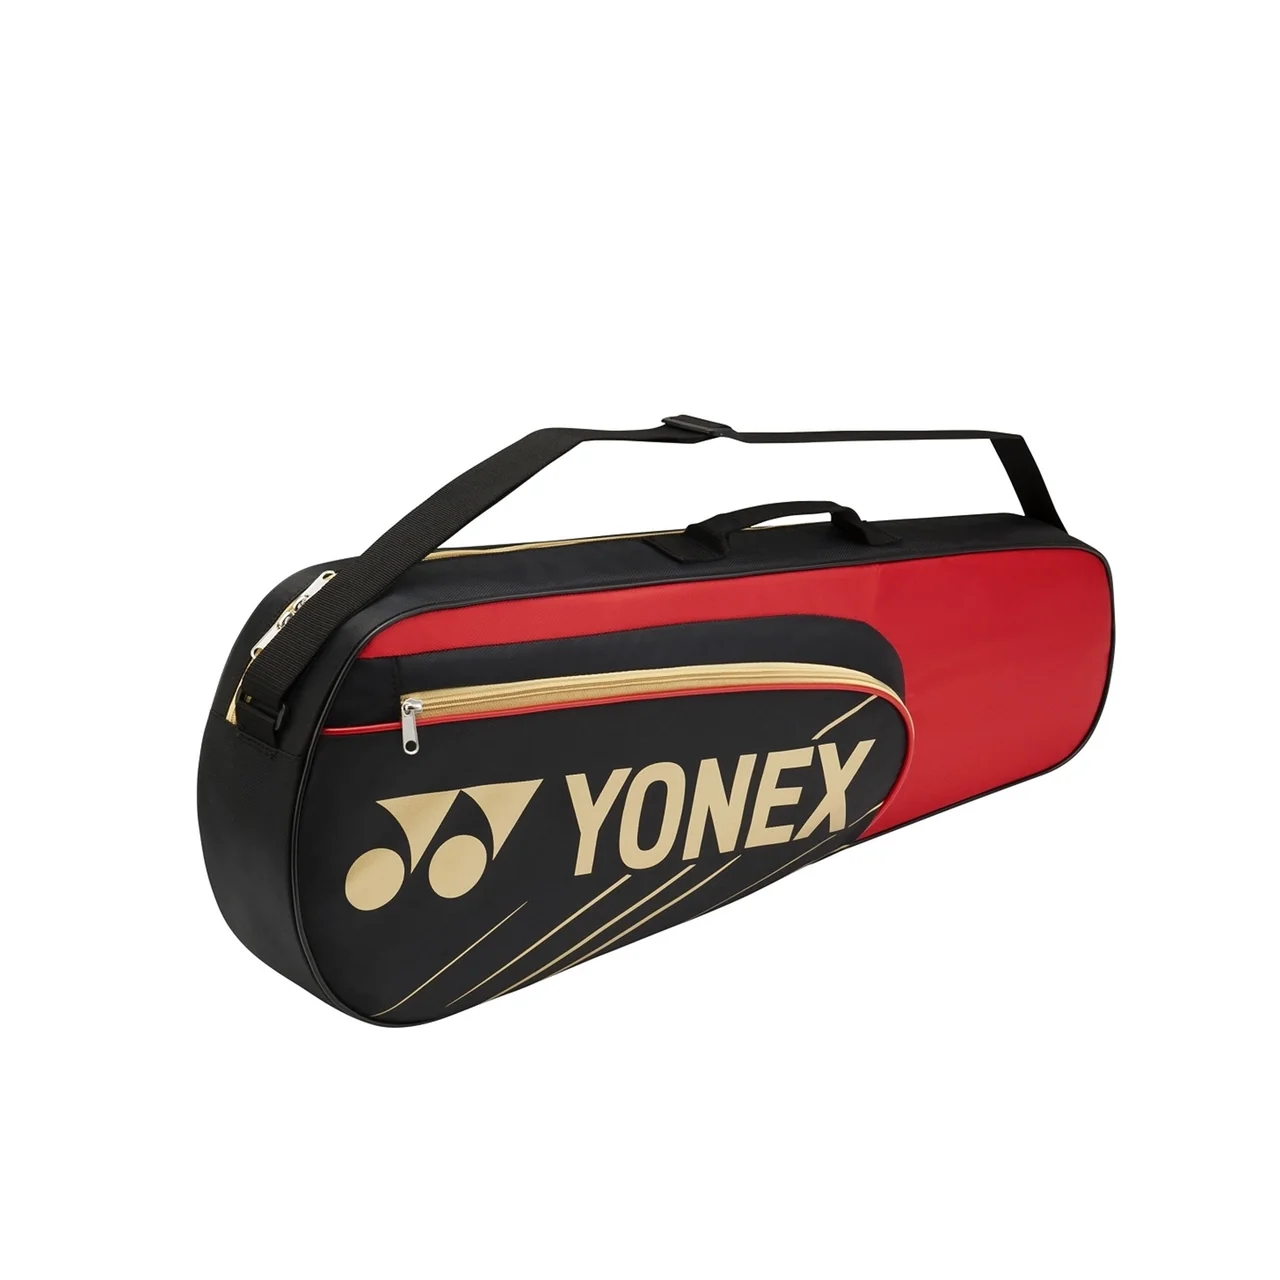 Yonex Team Collection x3 Black/Red